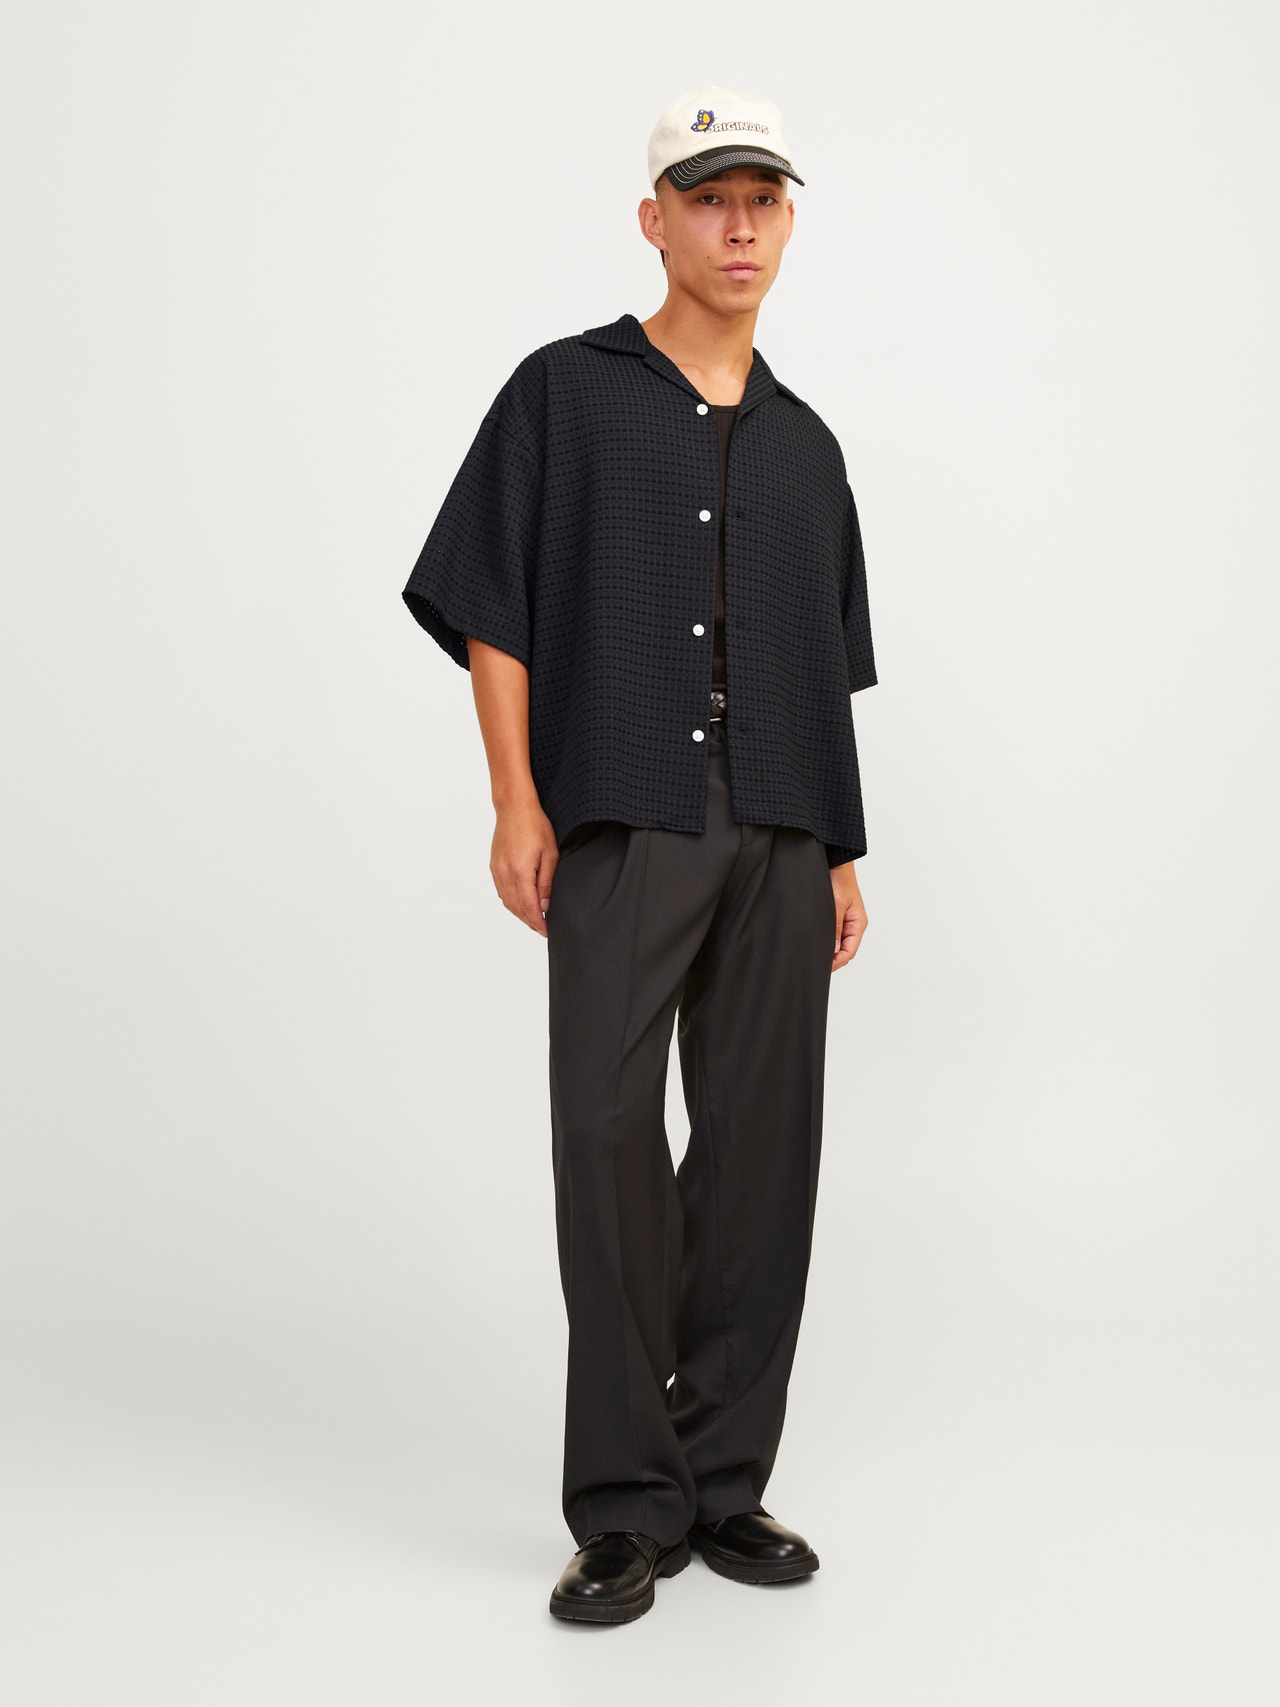 Jack & Jones Wide Fit Resort shirt -Black - 12255225